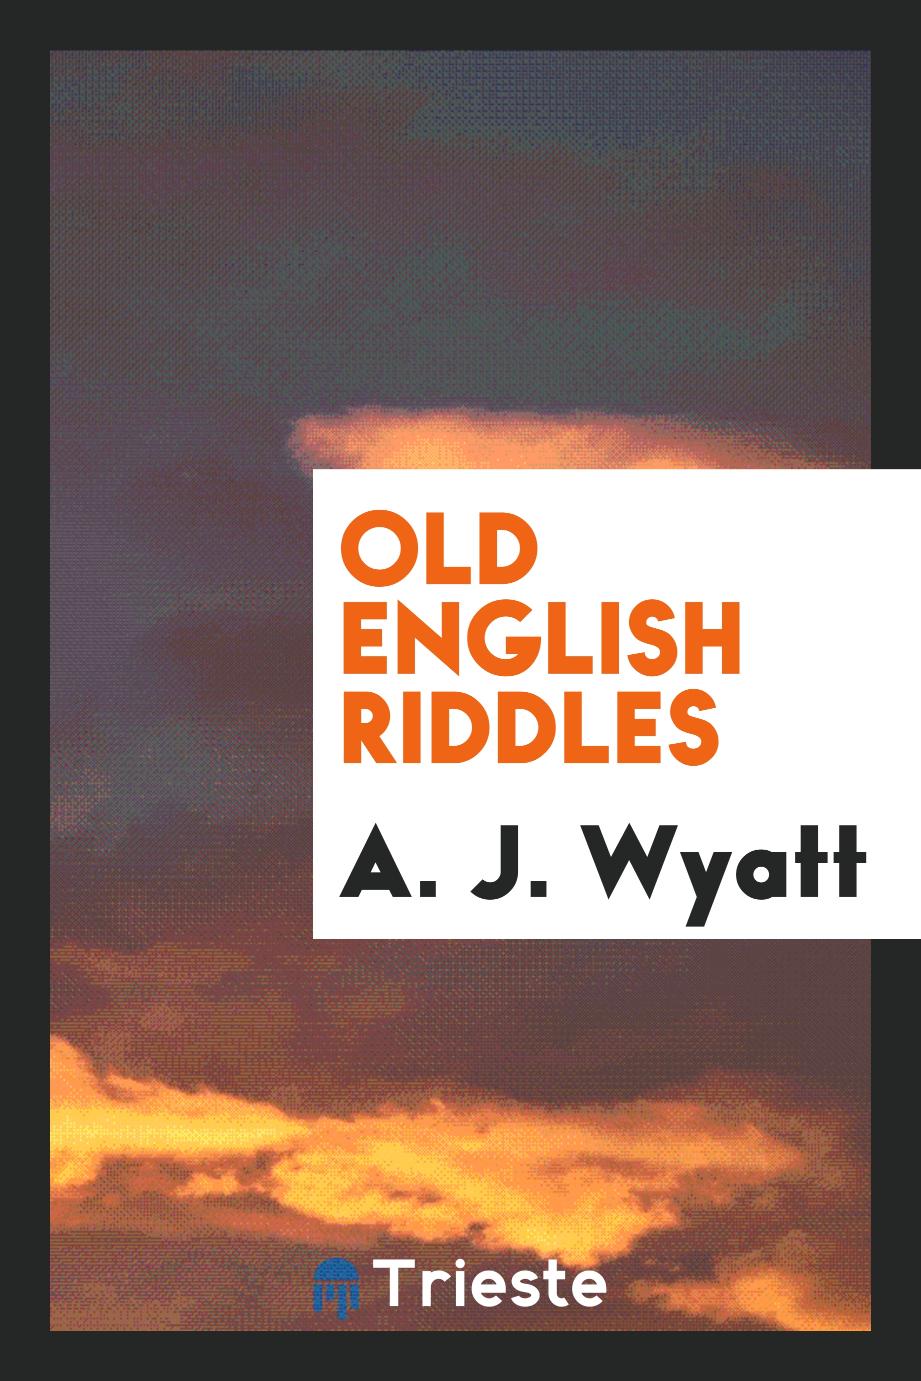 Old English riddles